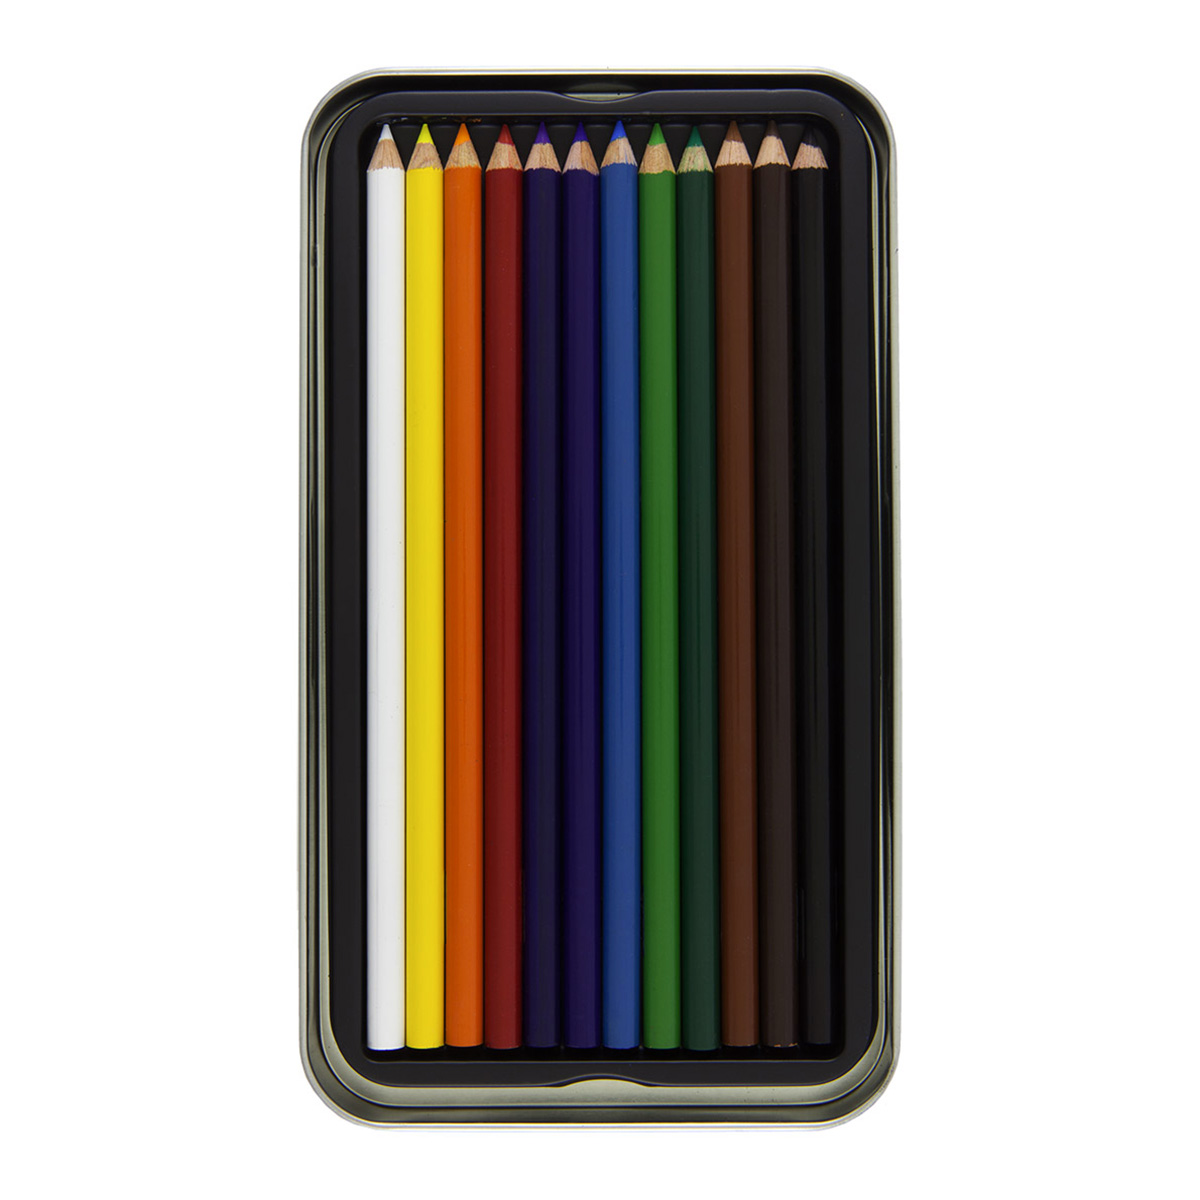 https://theinkstone.com/wp-content/uploads/2020/09/Prismacolor-Colored-Pencil-Set-12-1.jpg